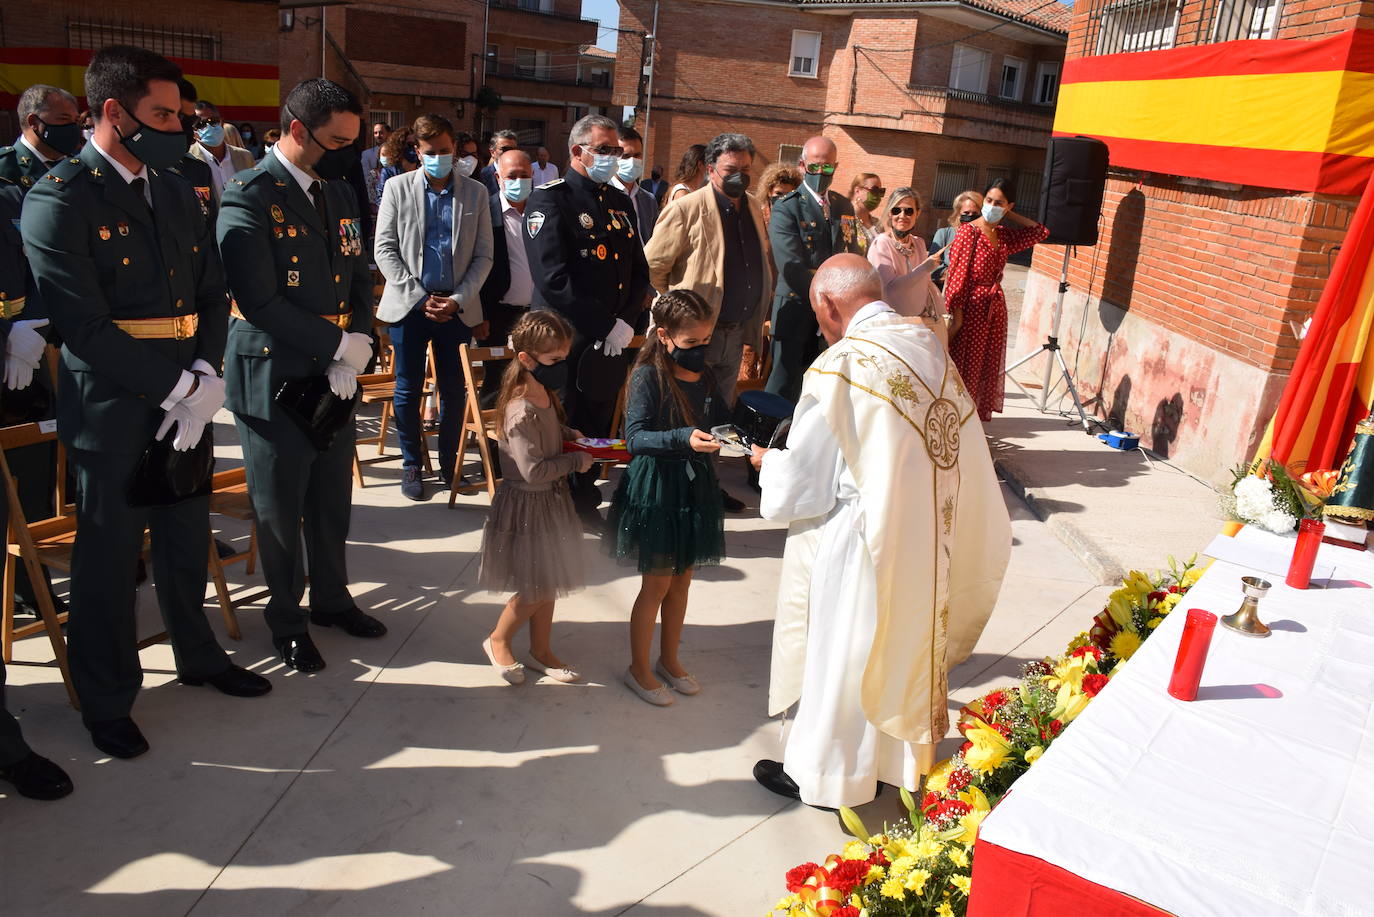 Fotos: La Guardia Civil celebra de nuevo su tradicional fiesta